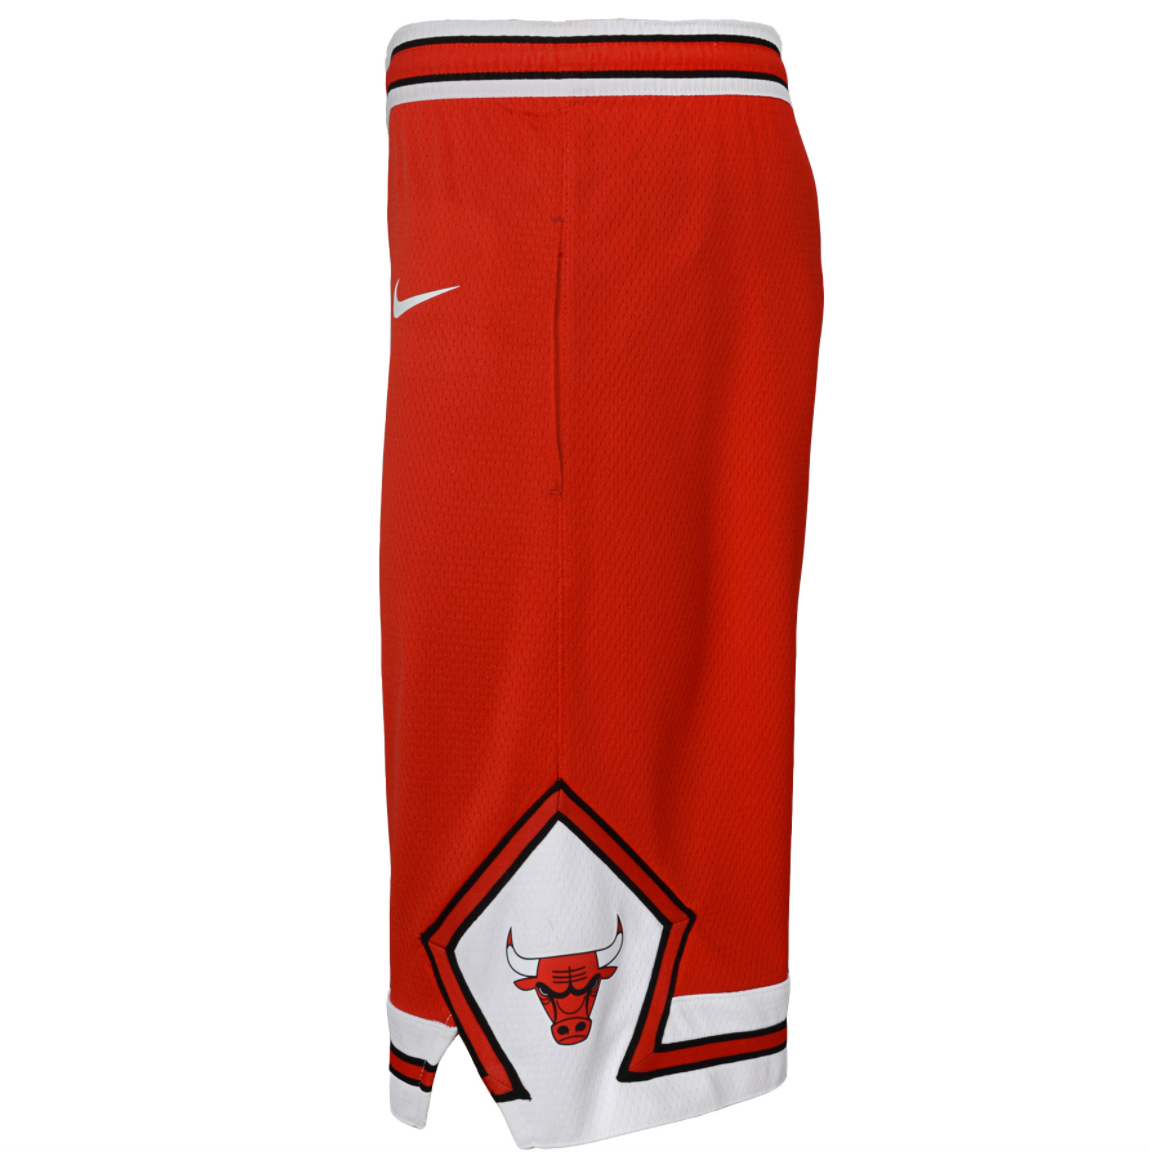 Chicago Bulls White Shorts, Basketball shorts & Jerseys - All sizes  Available – sporticofanshop